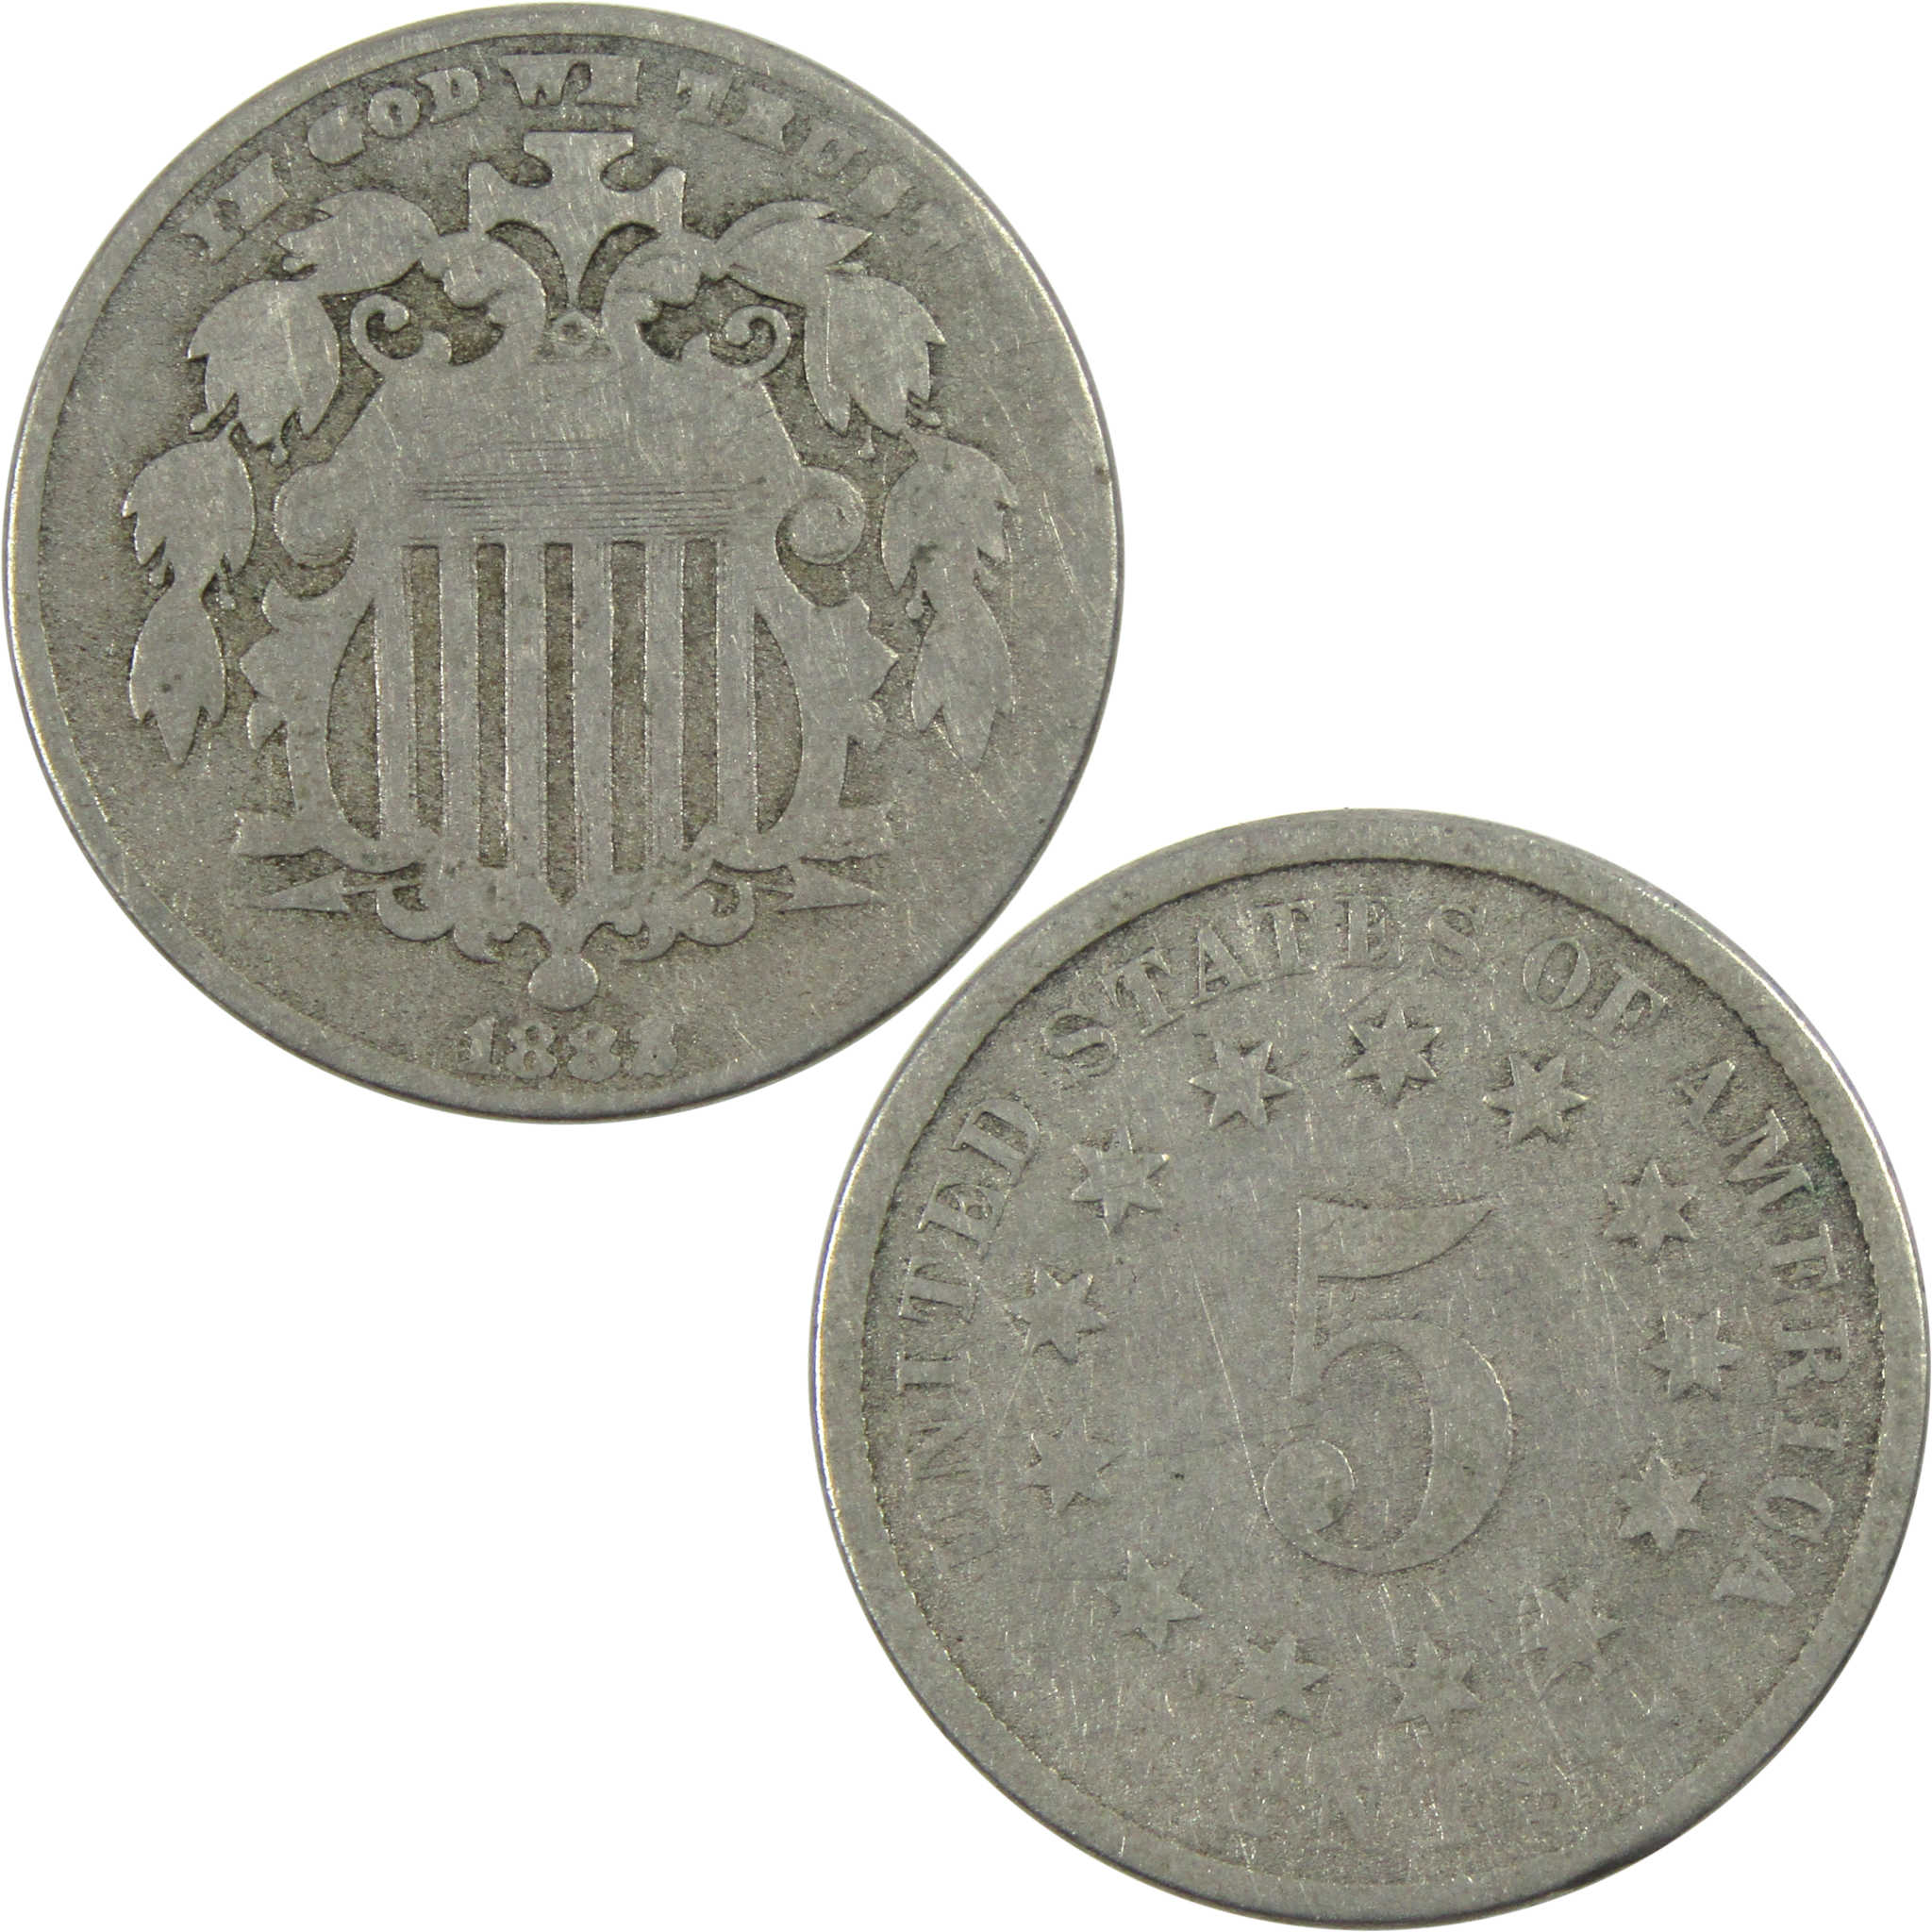 1882 Shield Nickel VG Very Good 5c Coin SKU:I13319